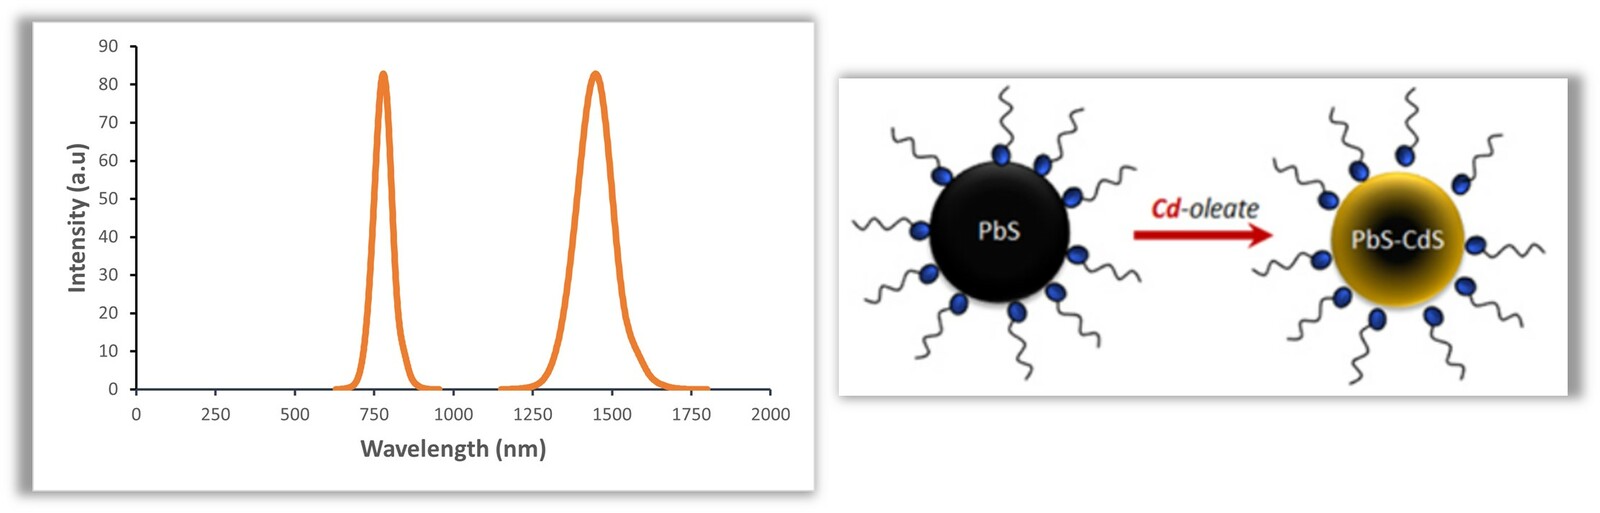 PbS/CdS Quantum Dots